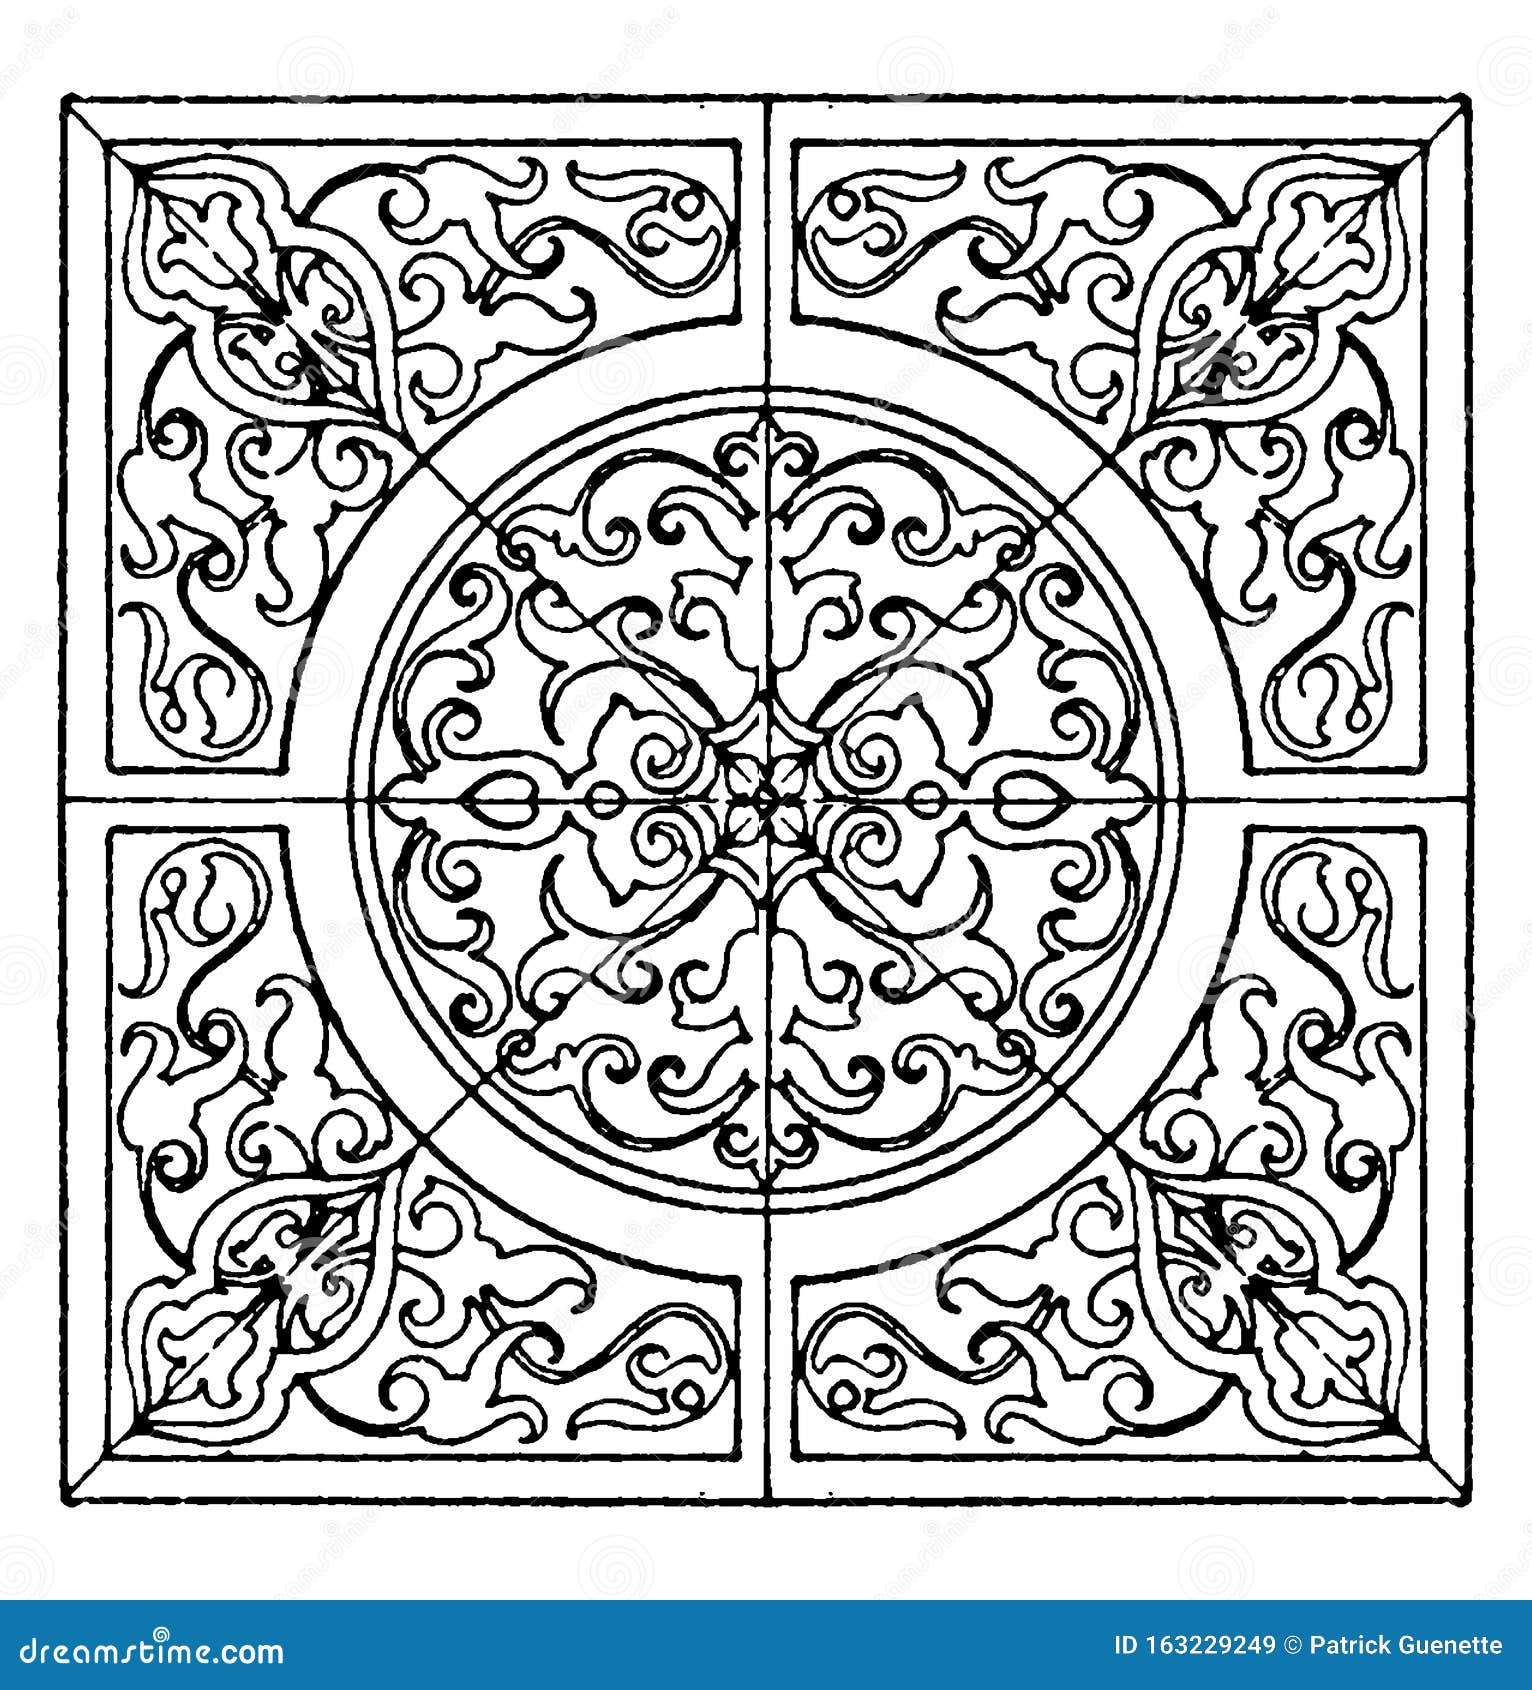 Renaissance Square Panel is a Modern German Design, Vintage Engraving ...